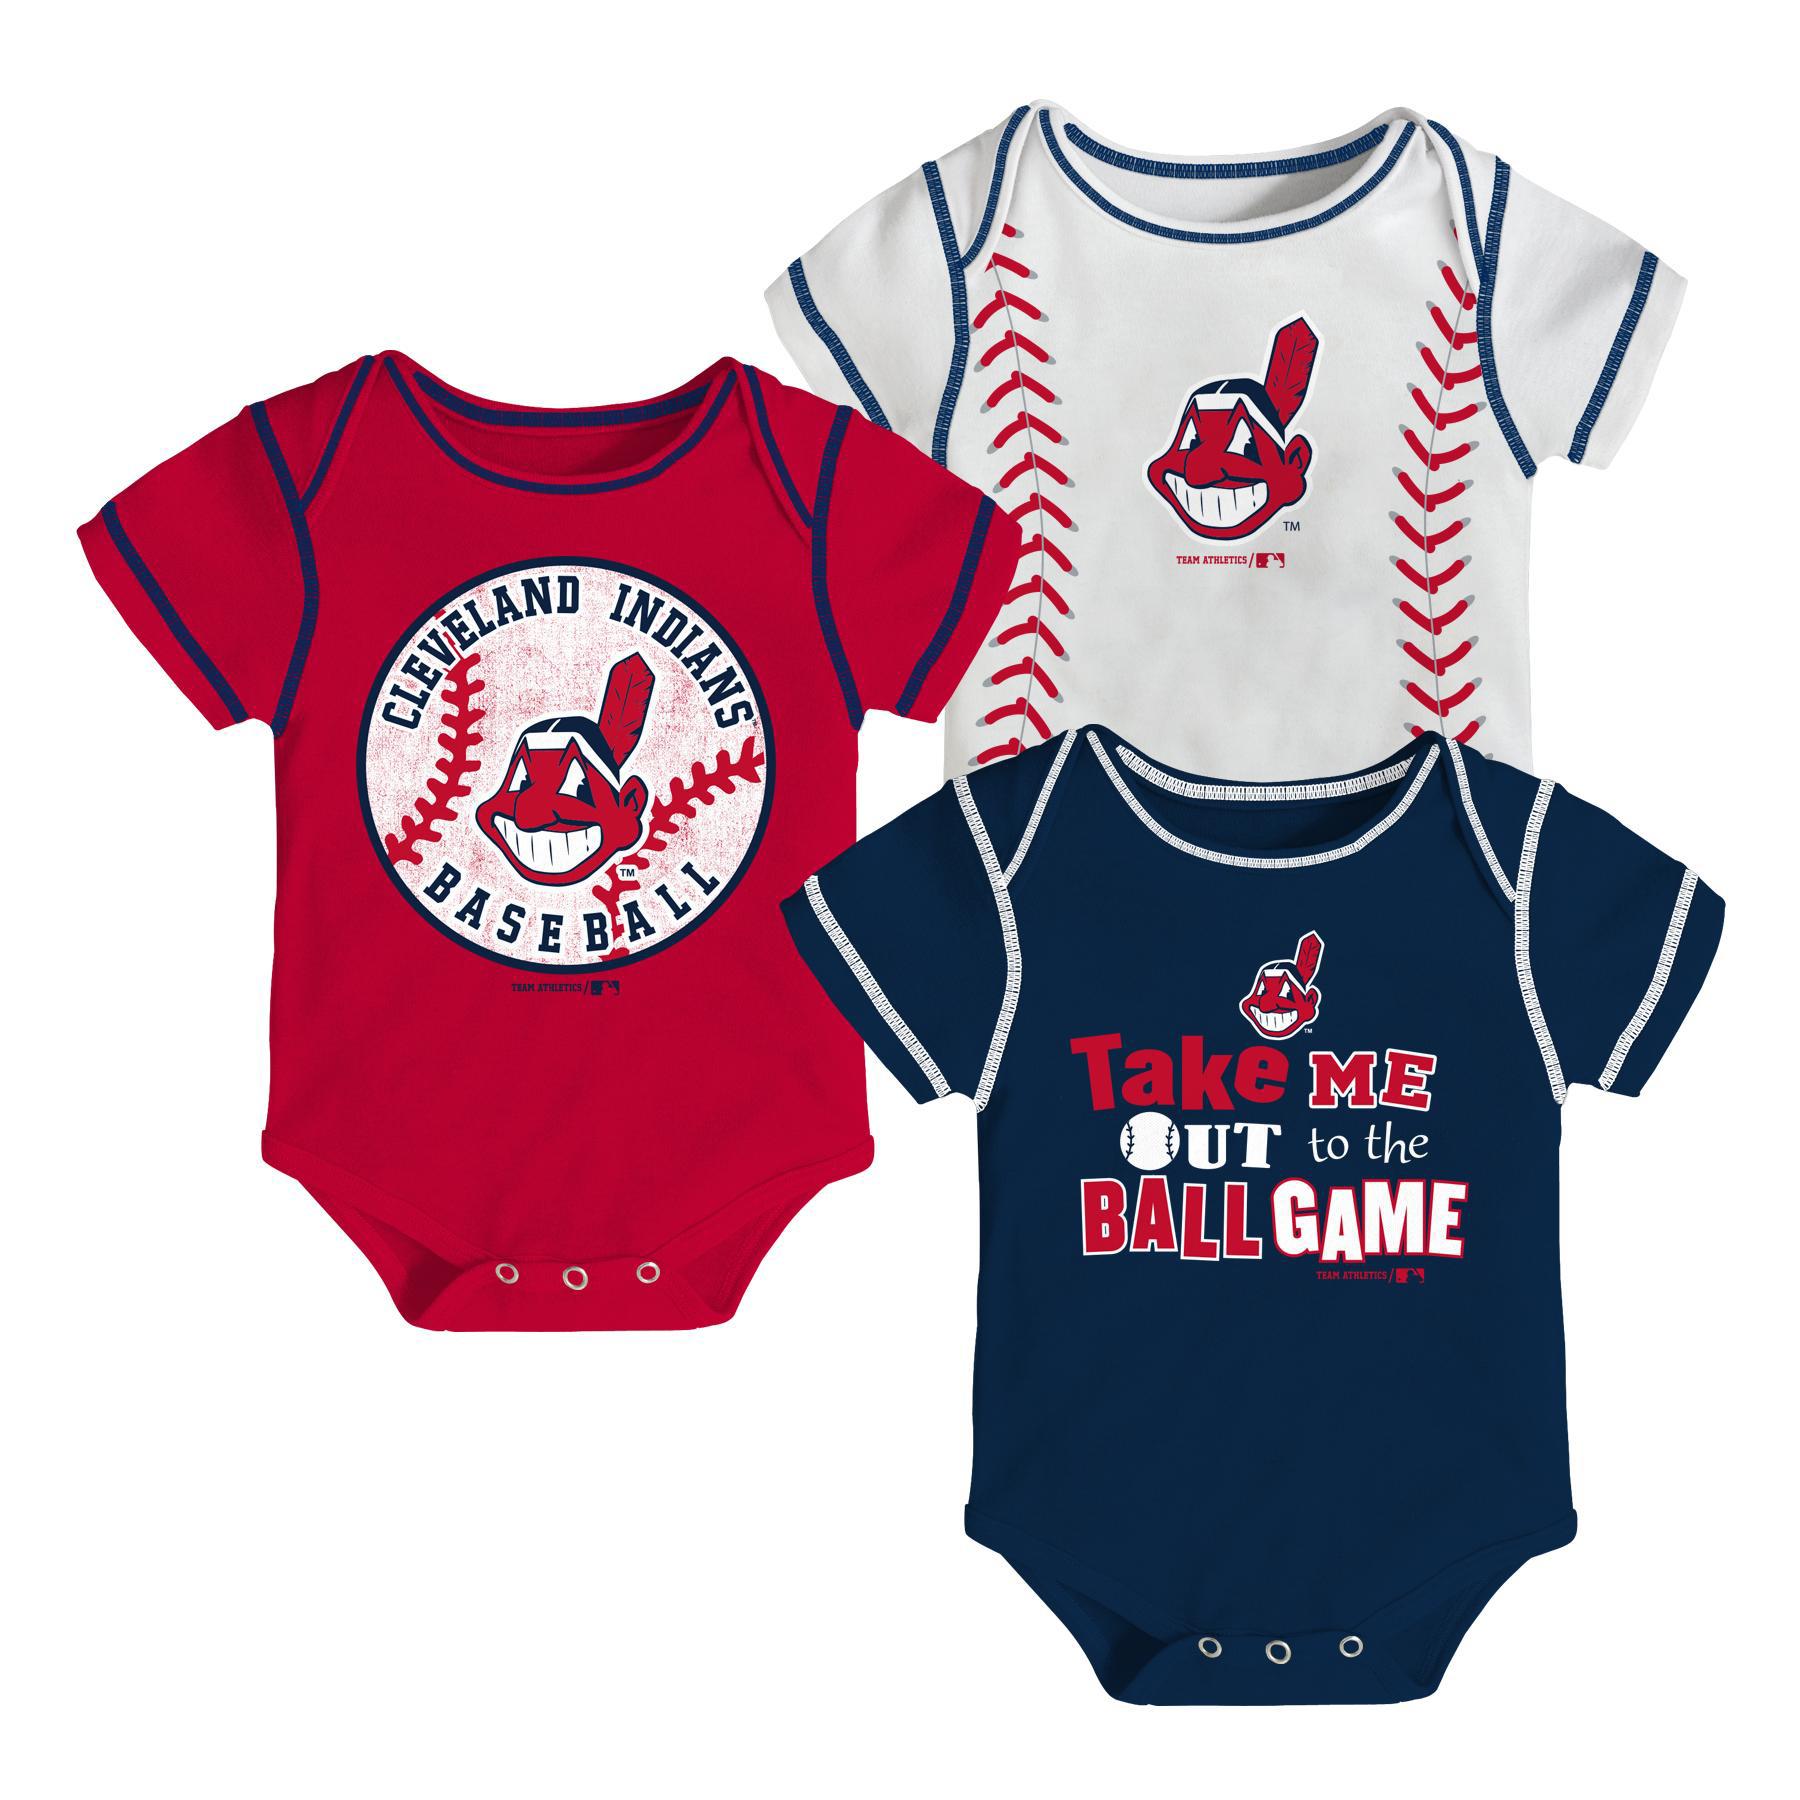 MLB Newborn & Infan tBoy's 3-Pack Bodysuits - Cleveland Indians